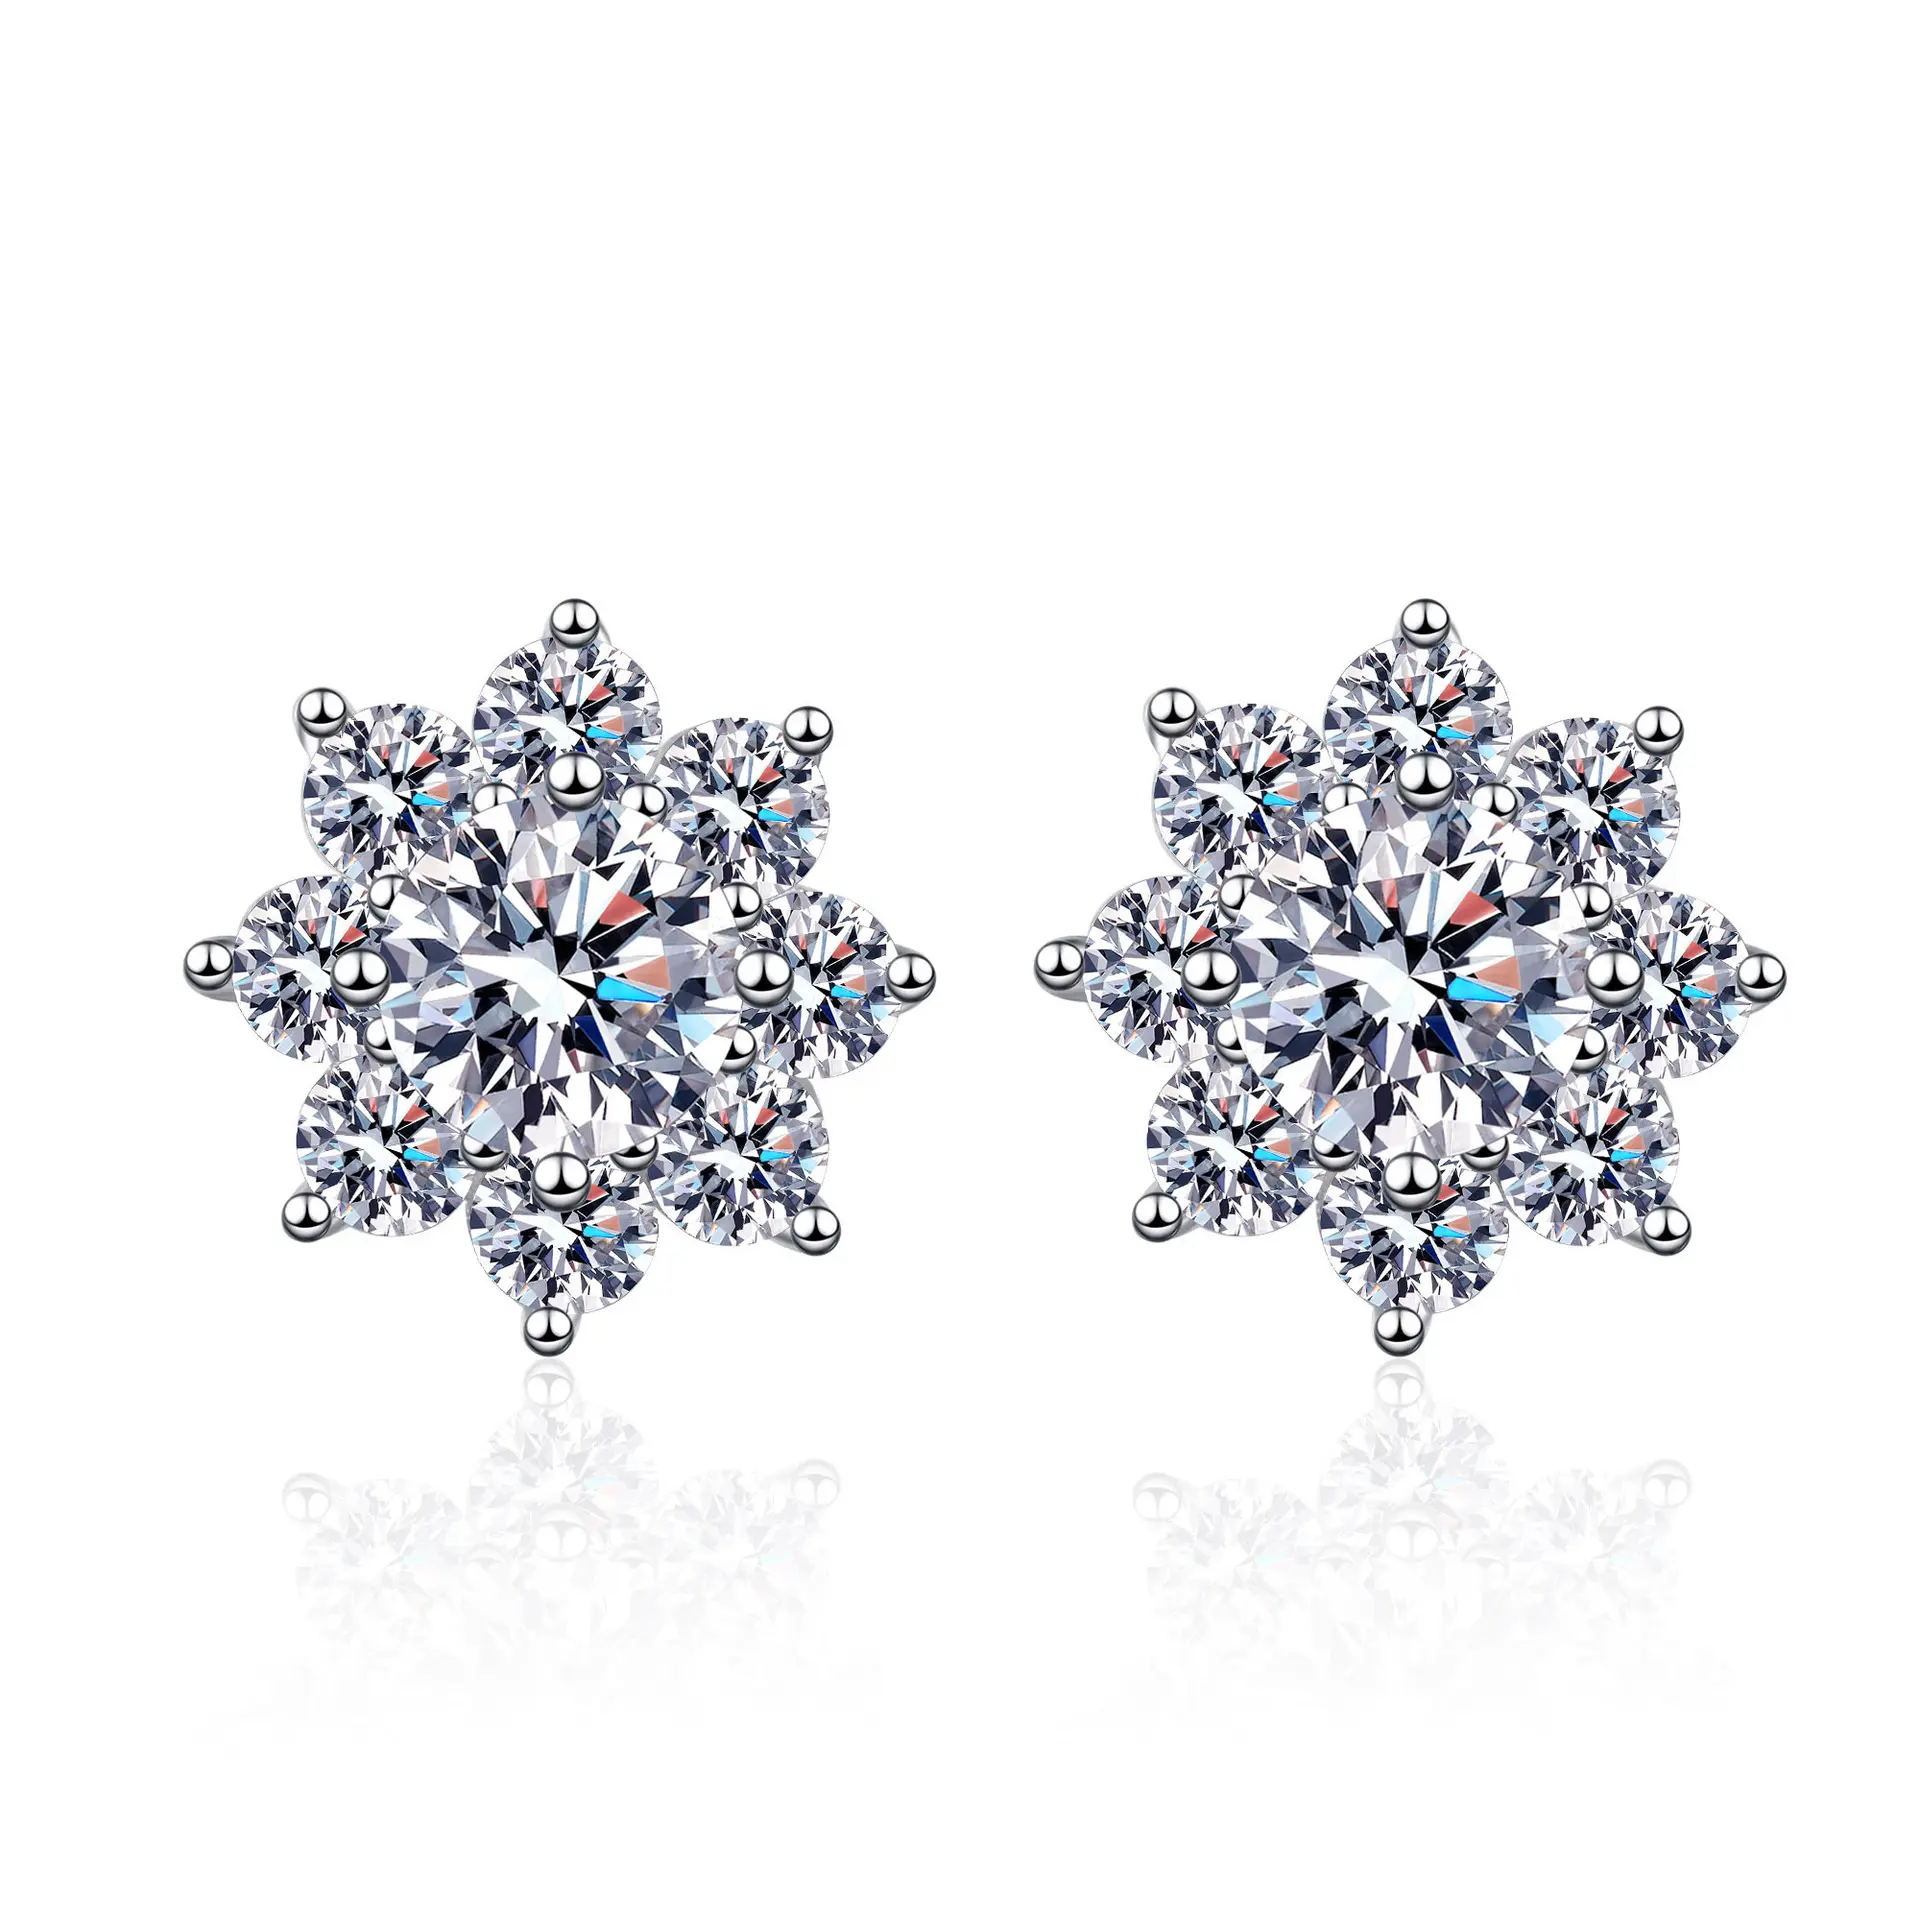 Asscher Cut 1 2CT Moissanite Earrings Designer Jewelry 925 Sterling Silver Moissanite Crystal Snowflake Stud Hoop Earrings